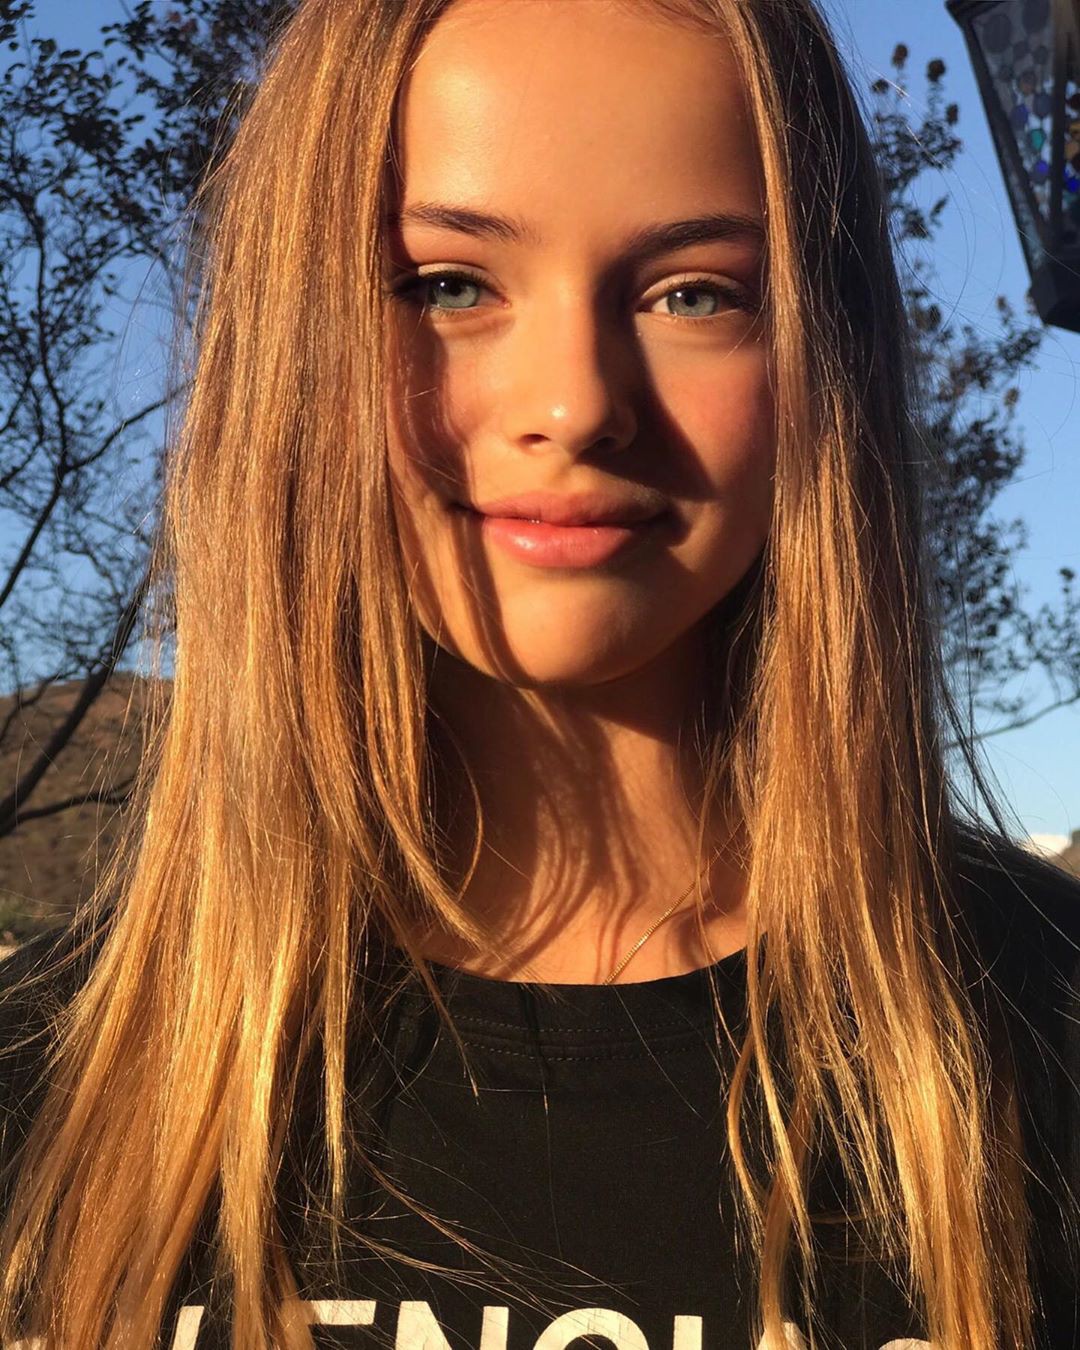 Kristina Pimenova natural blong hairs, Beautiful Girl Cute Face, Lips Smile  | Kristina Pimenova Cute Photos | Blonde Hair, Brown hair, Cute Girls  Instagram